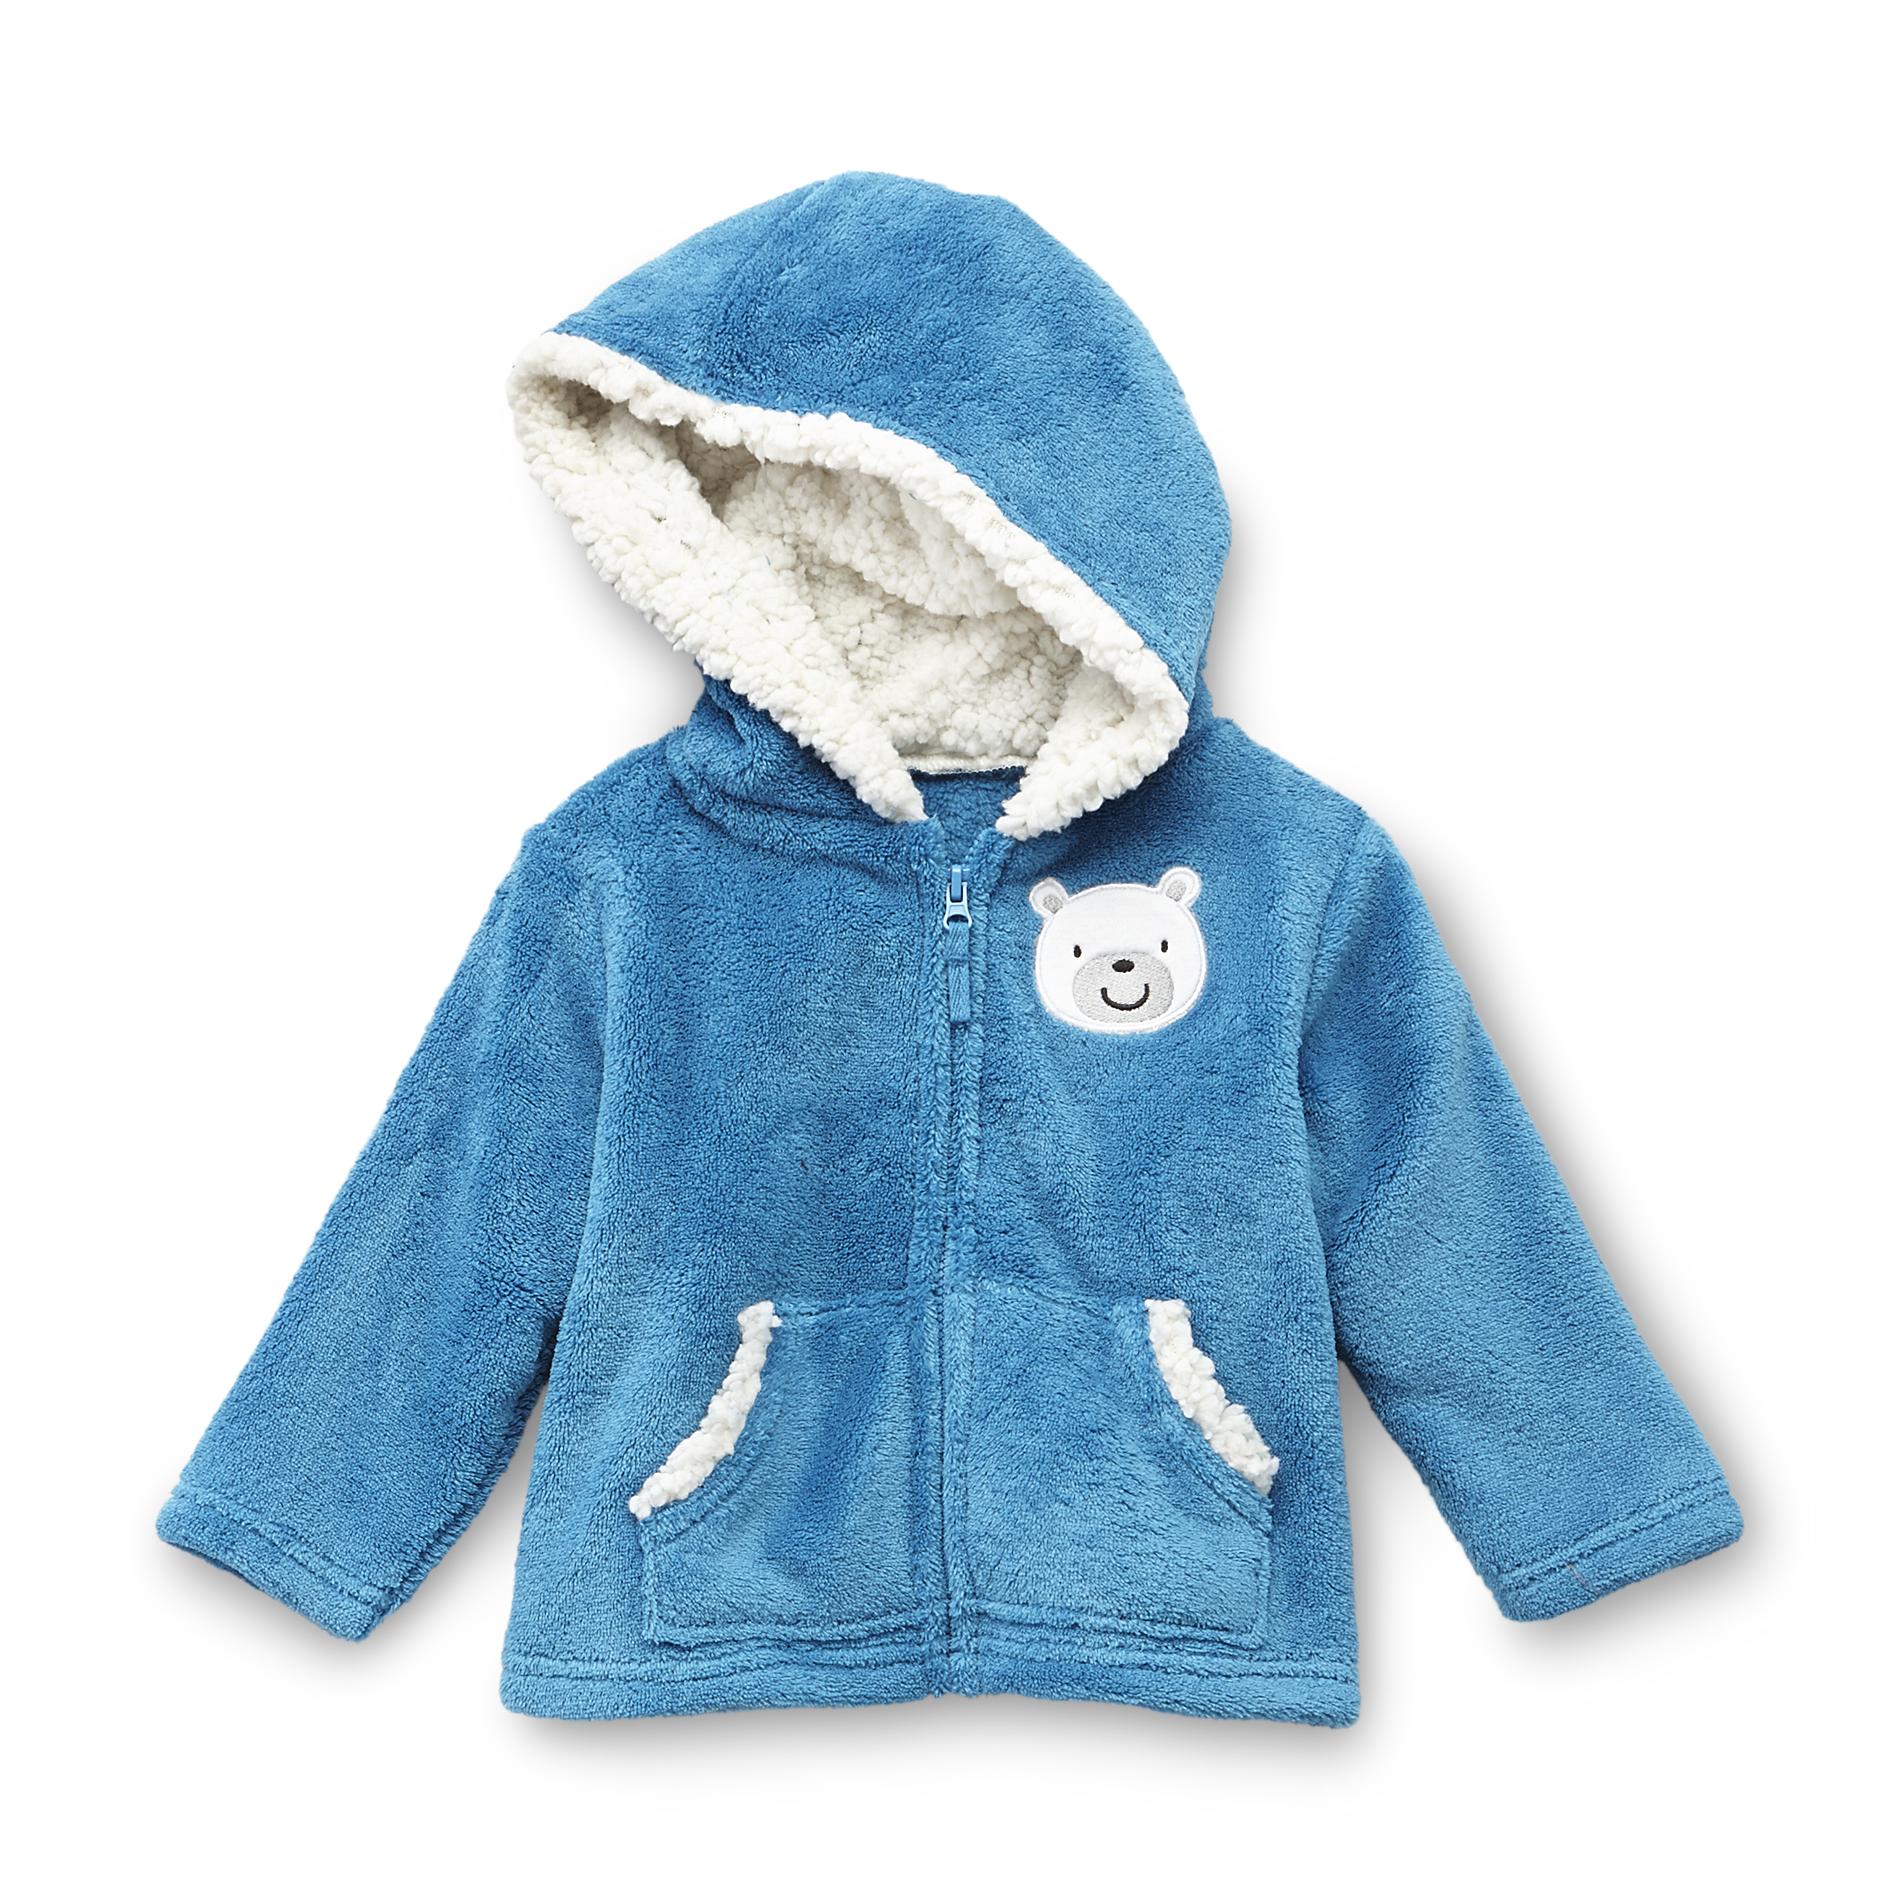 Small Wonders Newborn Boy's Plush Hoodie Jacket - Bear